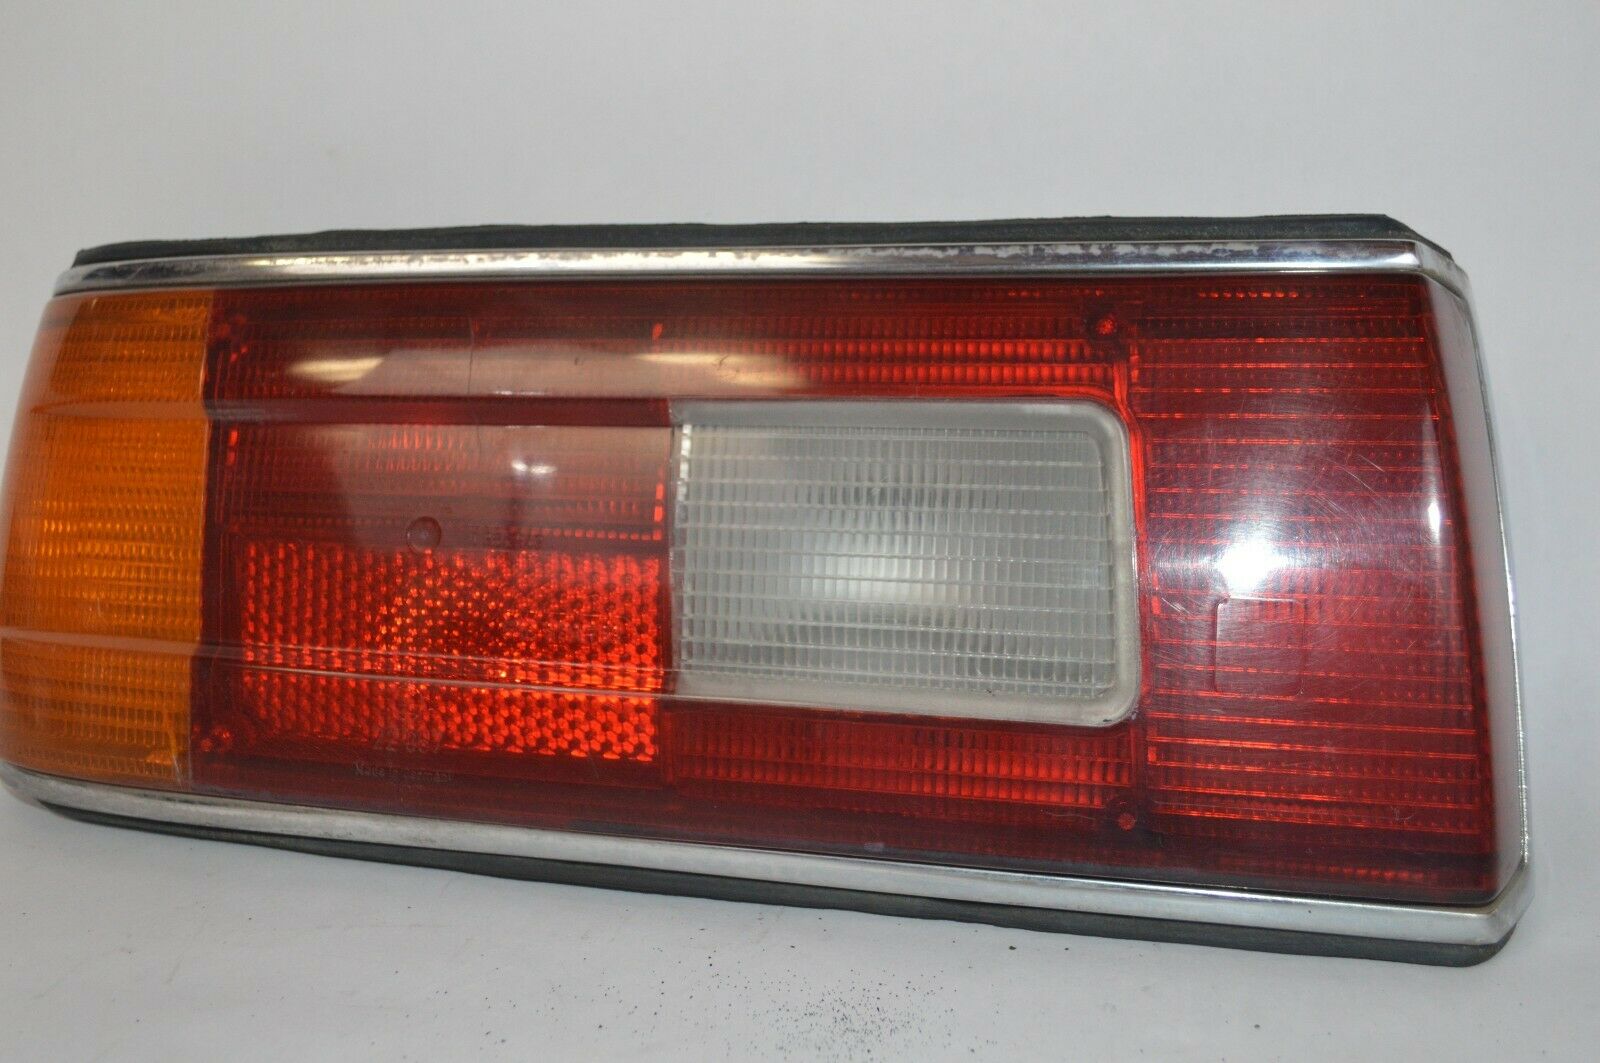 Used 1977-1987 BMW 733i 735i E23 Left Driver Side Tail Light